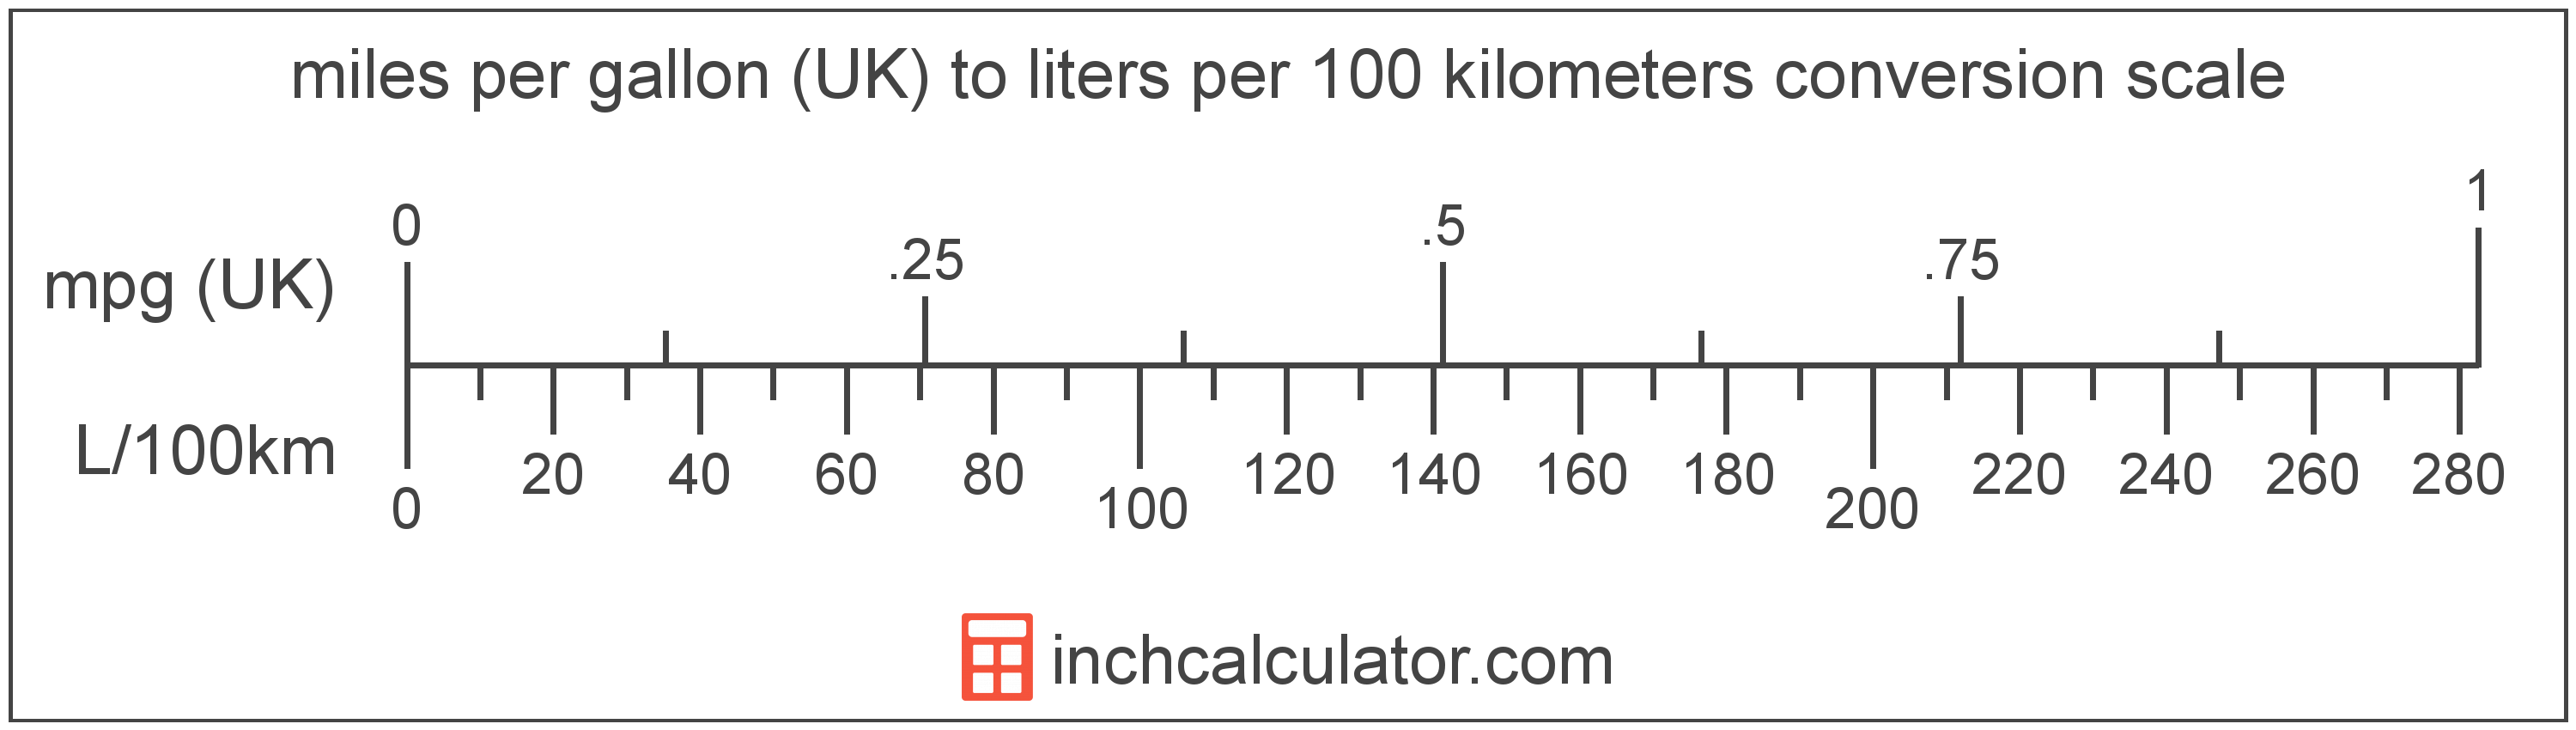 conversion scale showing miles per gallon (UK) and equivalent liters per 100 kilometers fuel economy values